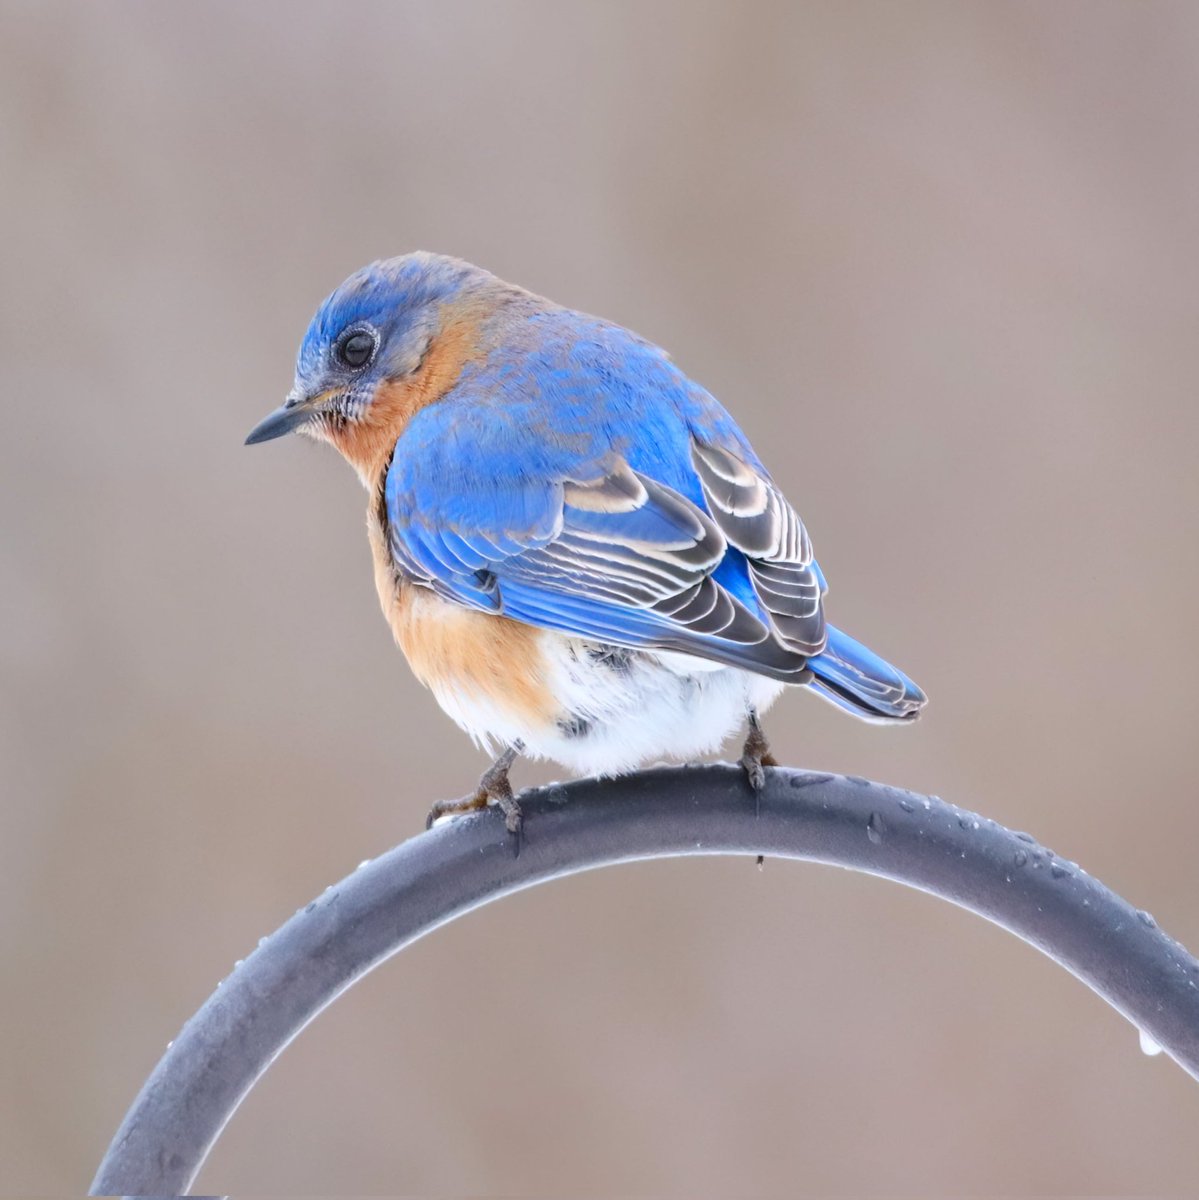 Happy Saturday from this beautiful bluebird!
#happysaturday #bluebirds #bluebird #ohiobirds #beautifulbluebird #ohiobirdworld #ohiobirdlovers #birdlovers #birdwatching #birdwatchers #birdlife #birdwatchersdaily #birdwatcher #birdloversdaily